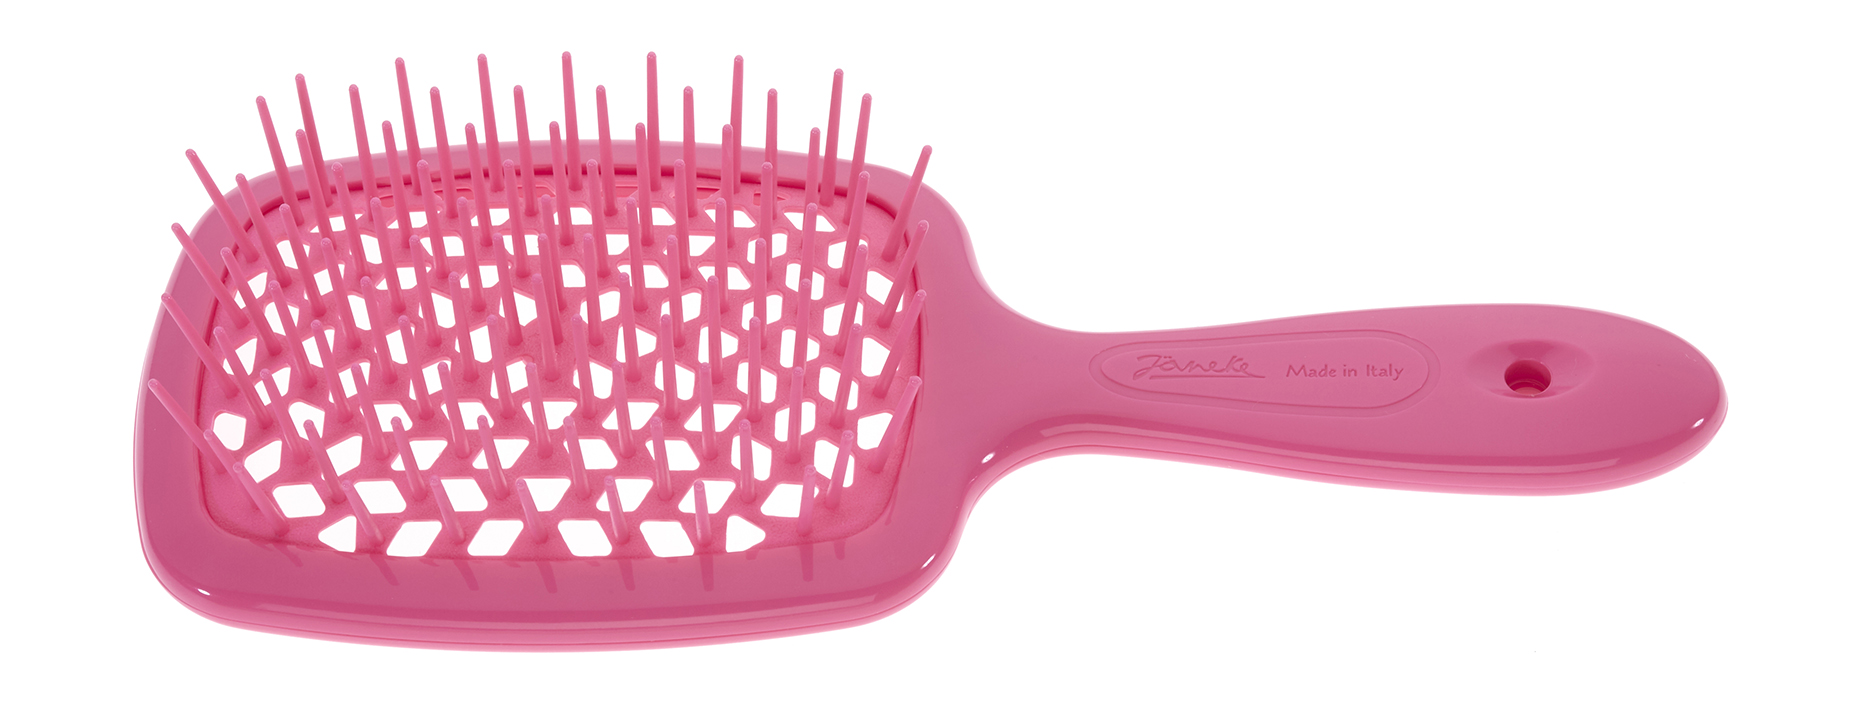 Щетка для волос Janeke Superbrush The Original Italian Patent Pink janeke щетка superbrush малая тиффани 17 5 х 7 х 3 см